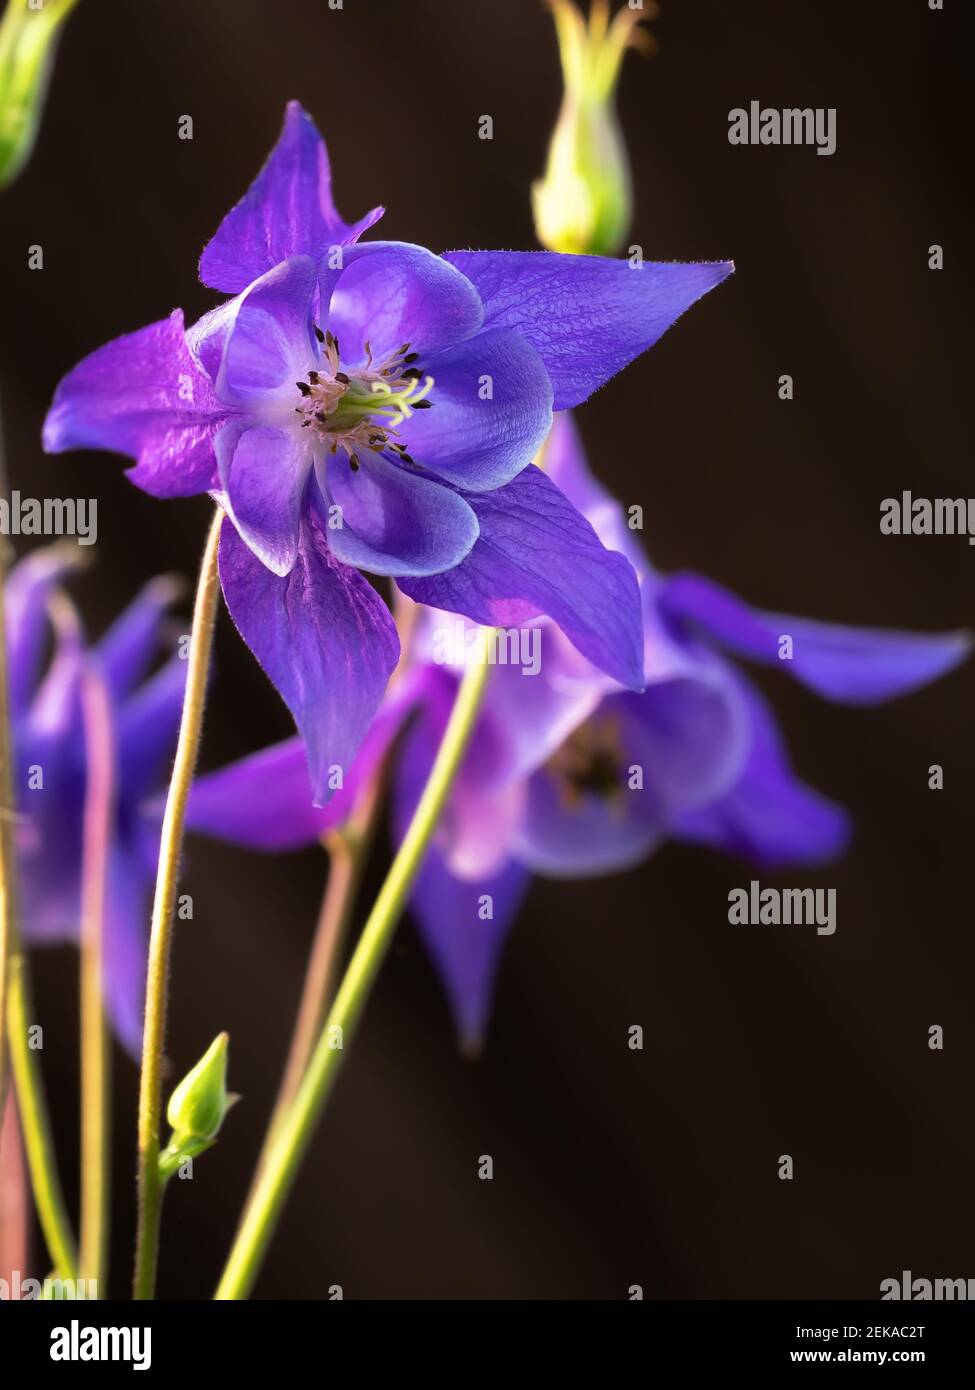 Perennial herb Aquilegia vulgaris with blue flowers on a dark blurred background. Stock Photo